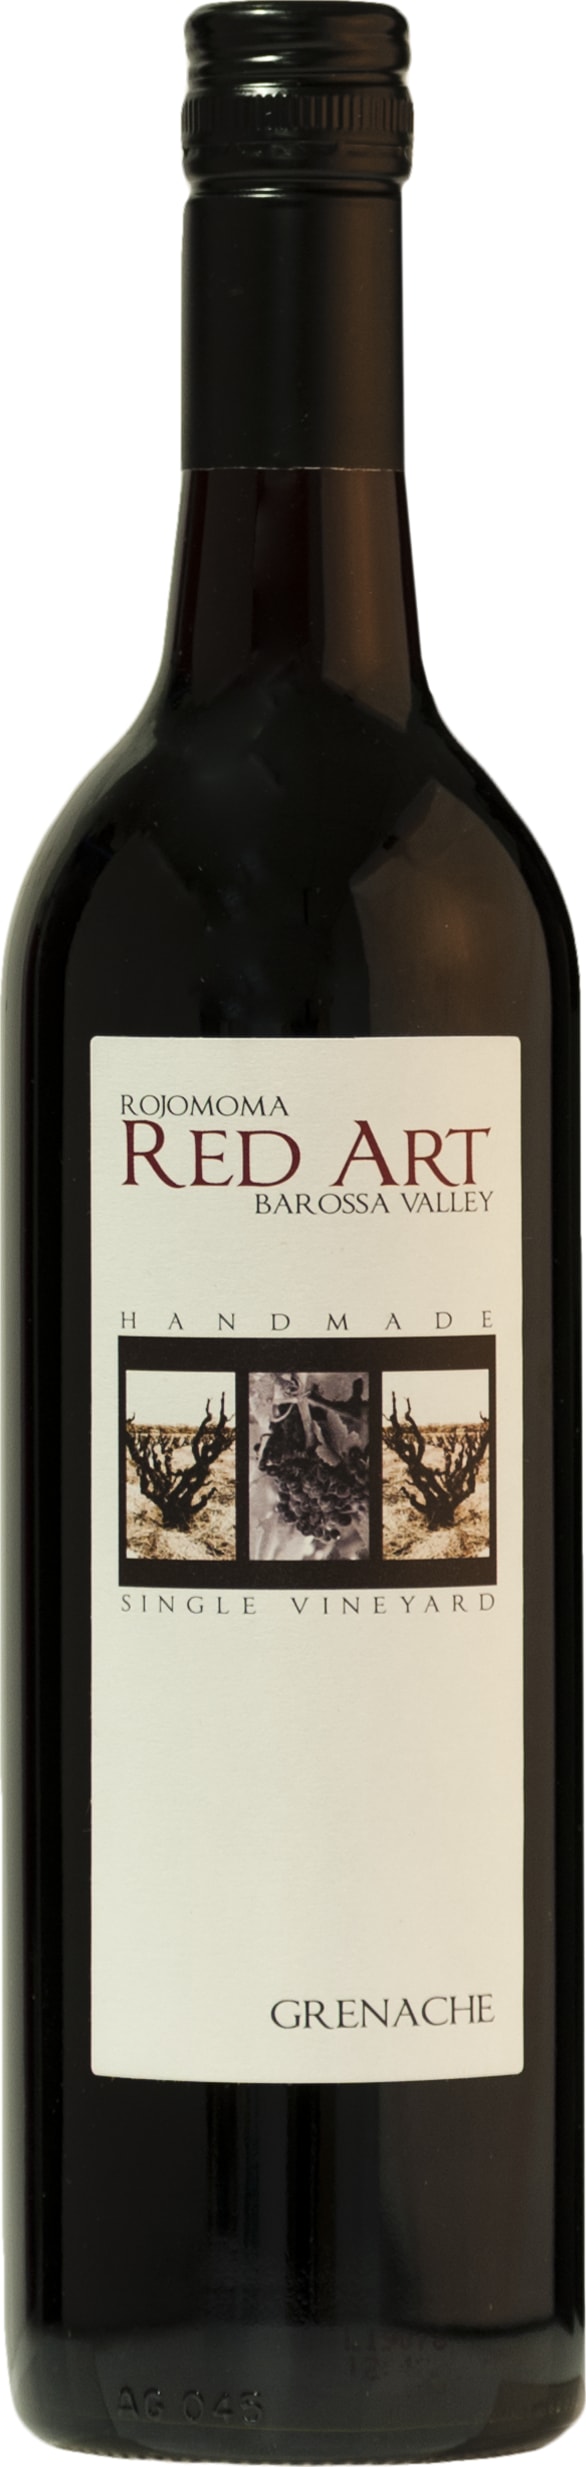 Rojomoma Red Art Grenache 2020 6x75cl - Just Wines 